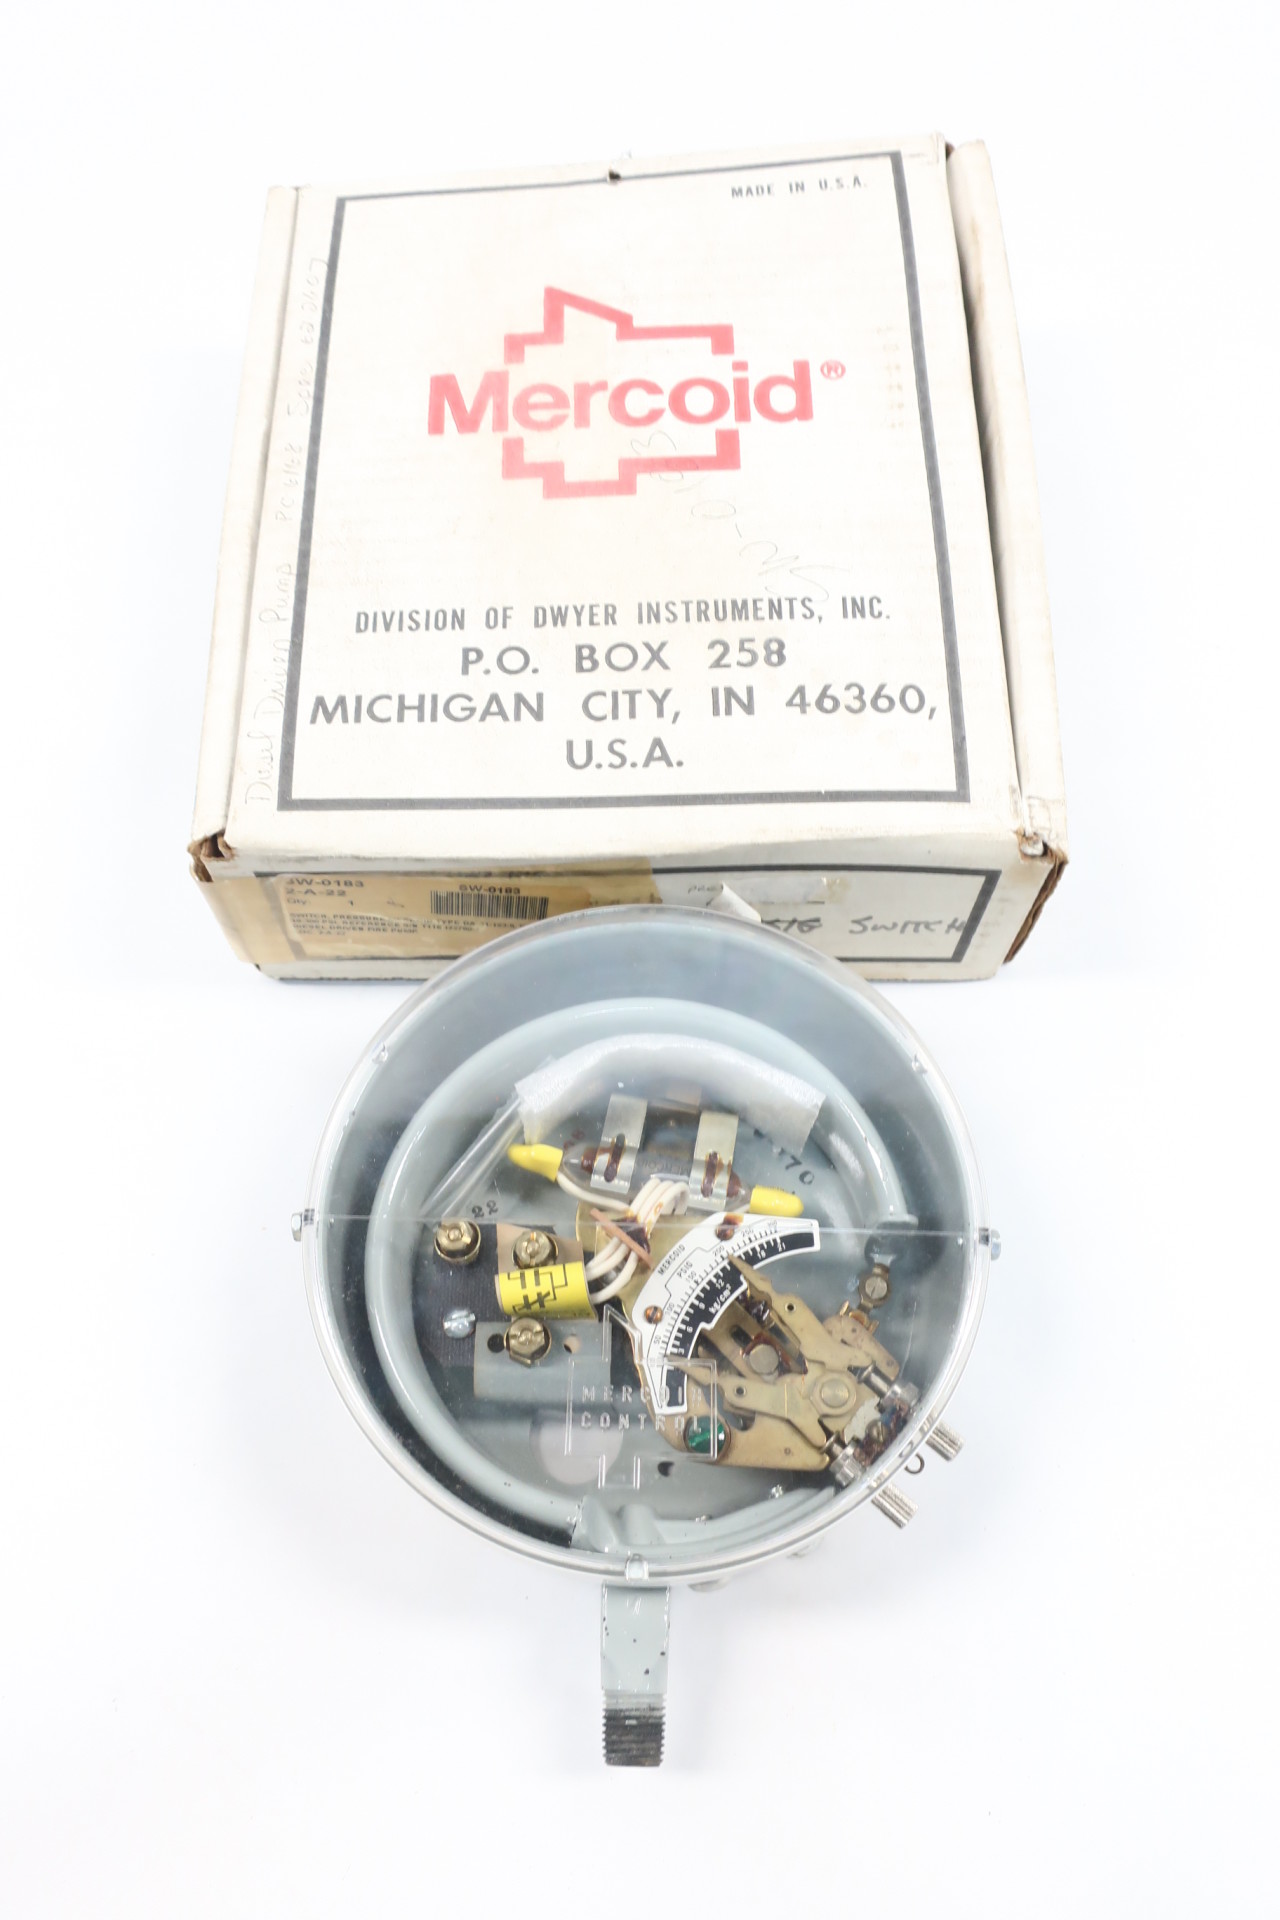 NEW IN BOX * Details about   MERCOID DA 35-3 RG 2 PRESSURE SWITCH